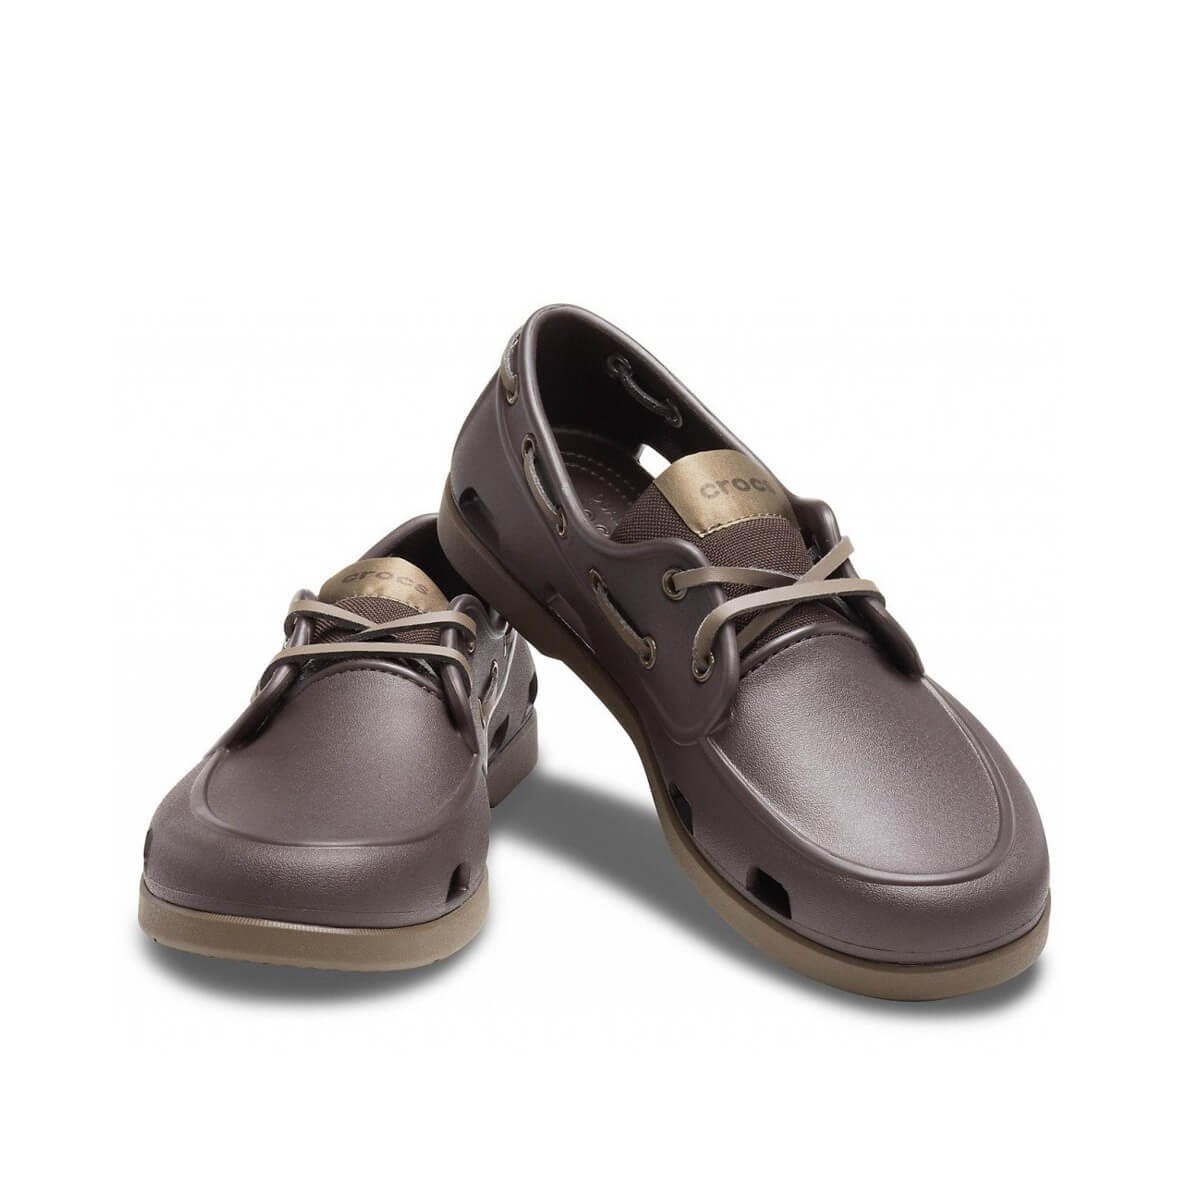 Crocs Classic Boat Shoe M Espresso/Walnut Erkek Ayakkabı